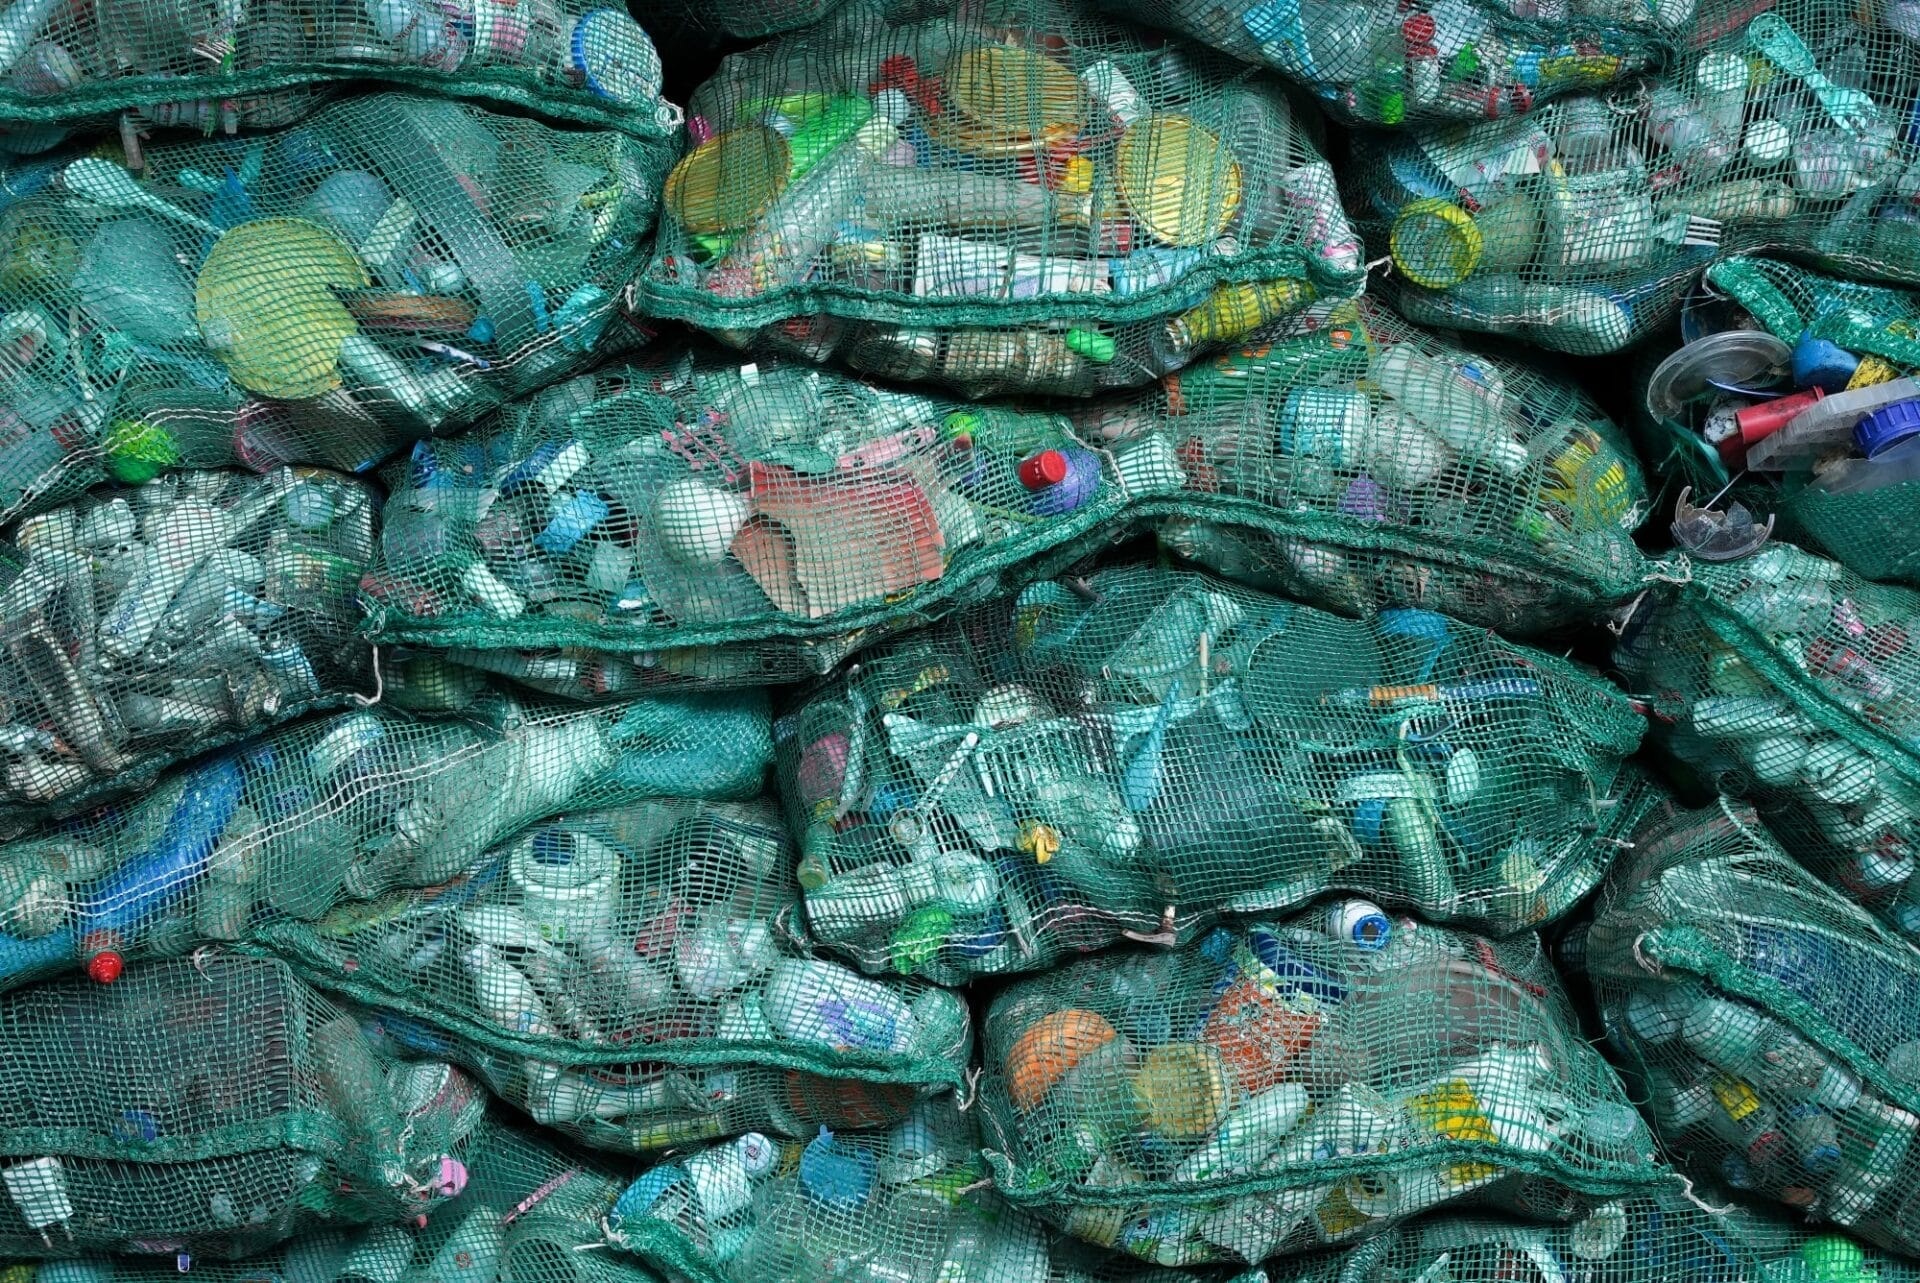 Meubels gemaakt van plastic afval op Bali